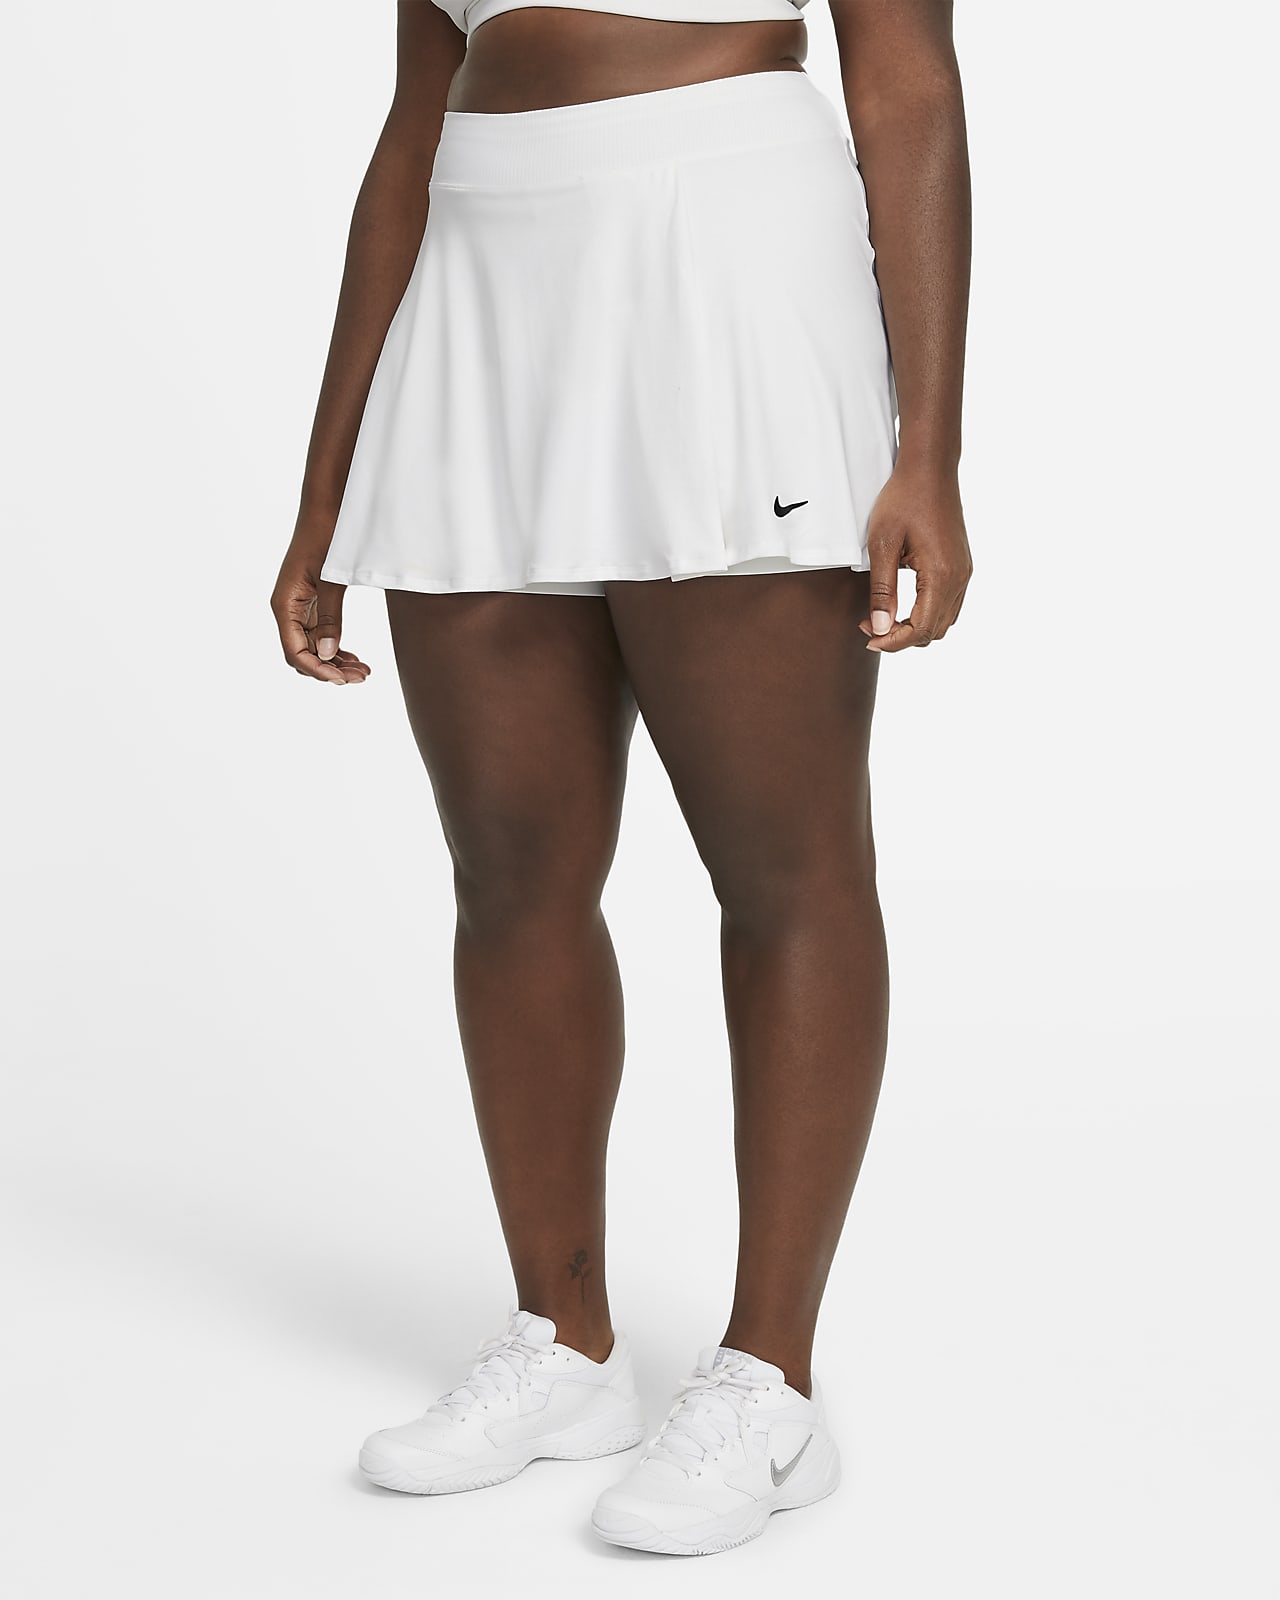 pleated white tennis skirt nike